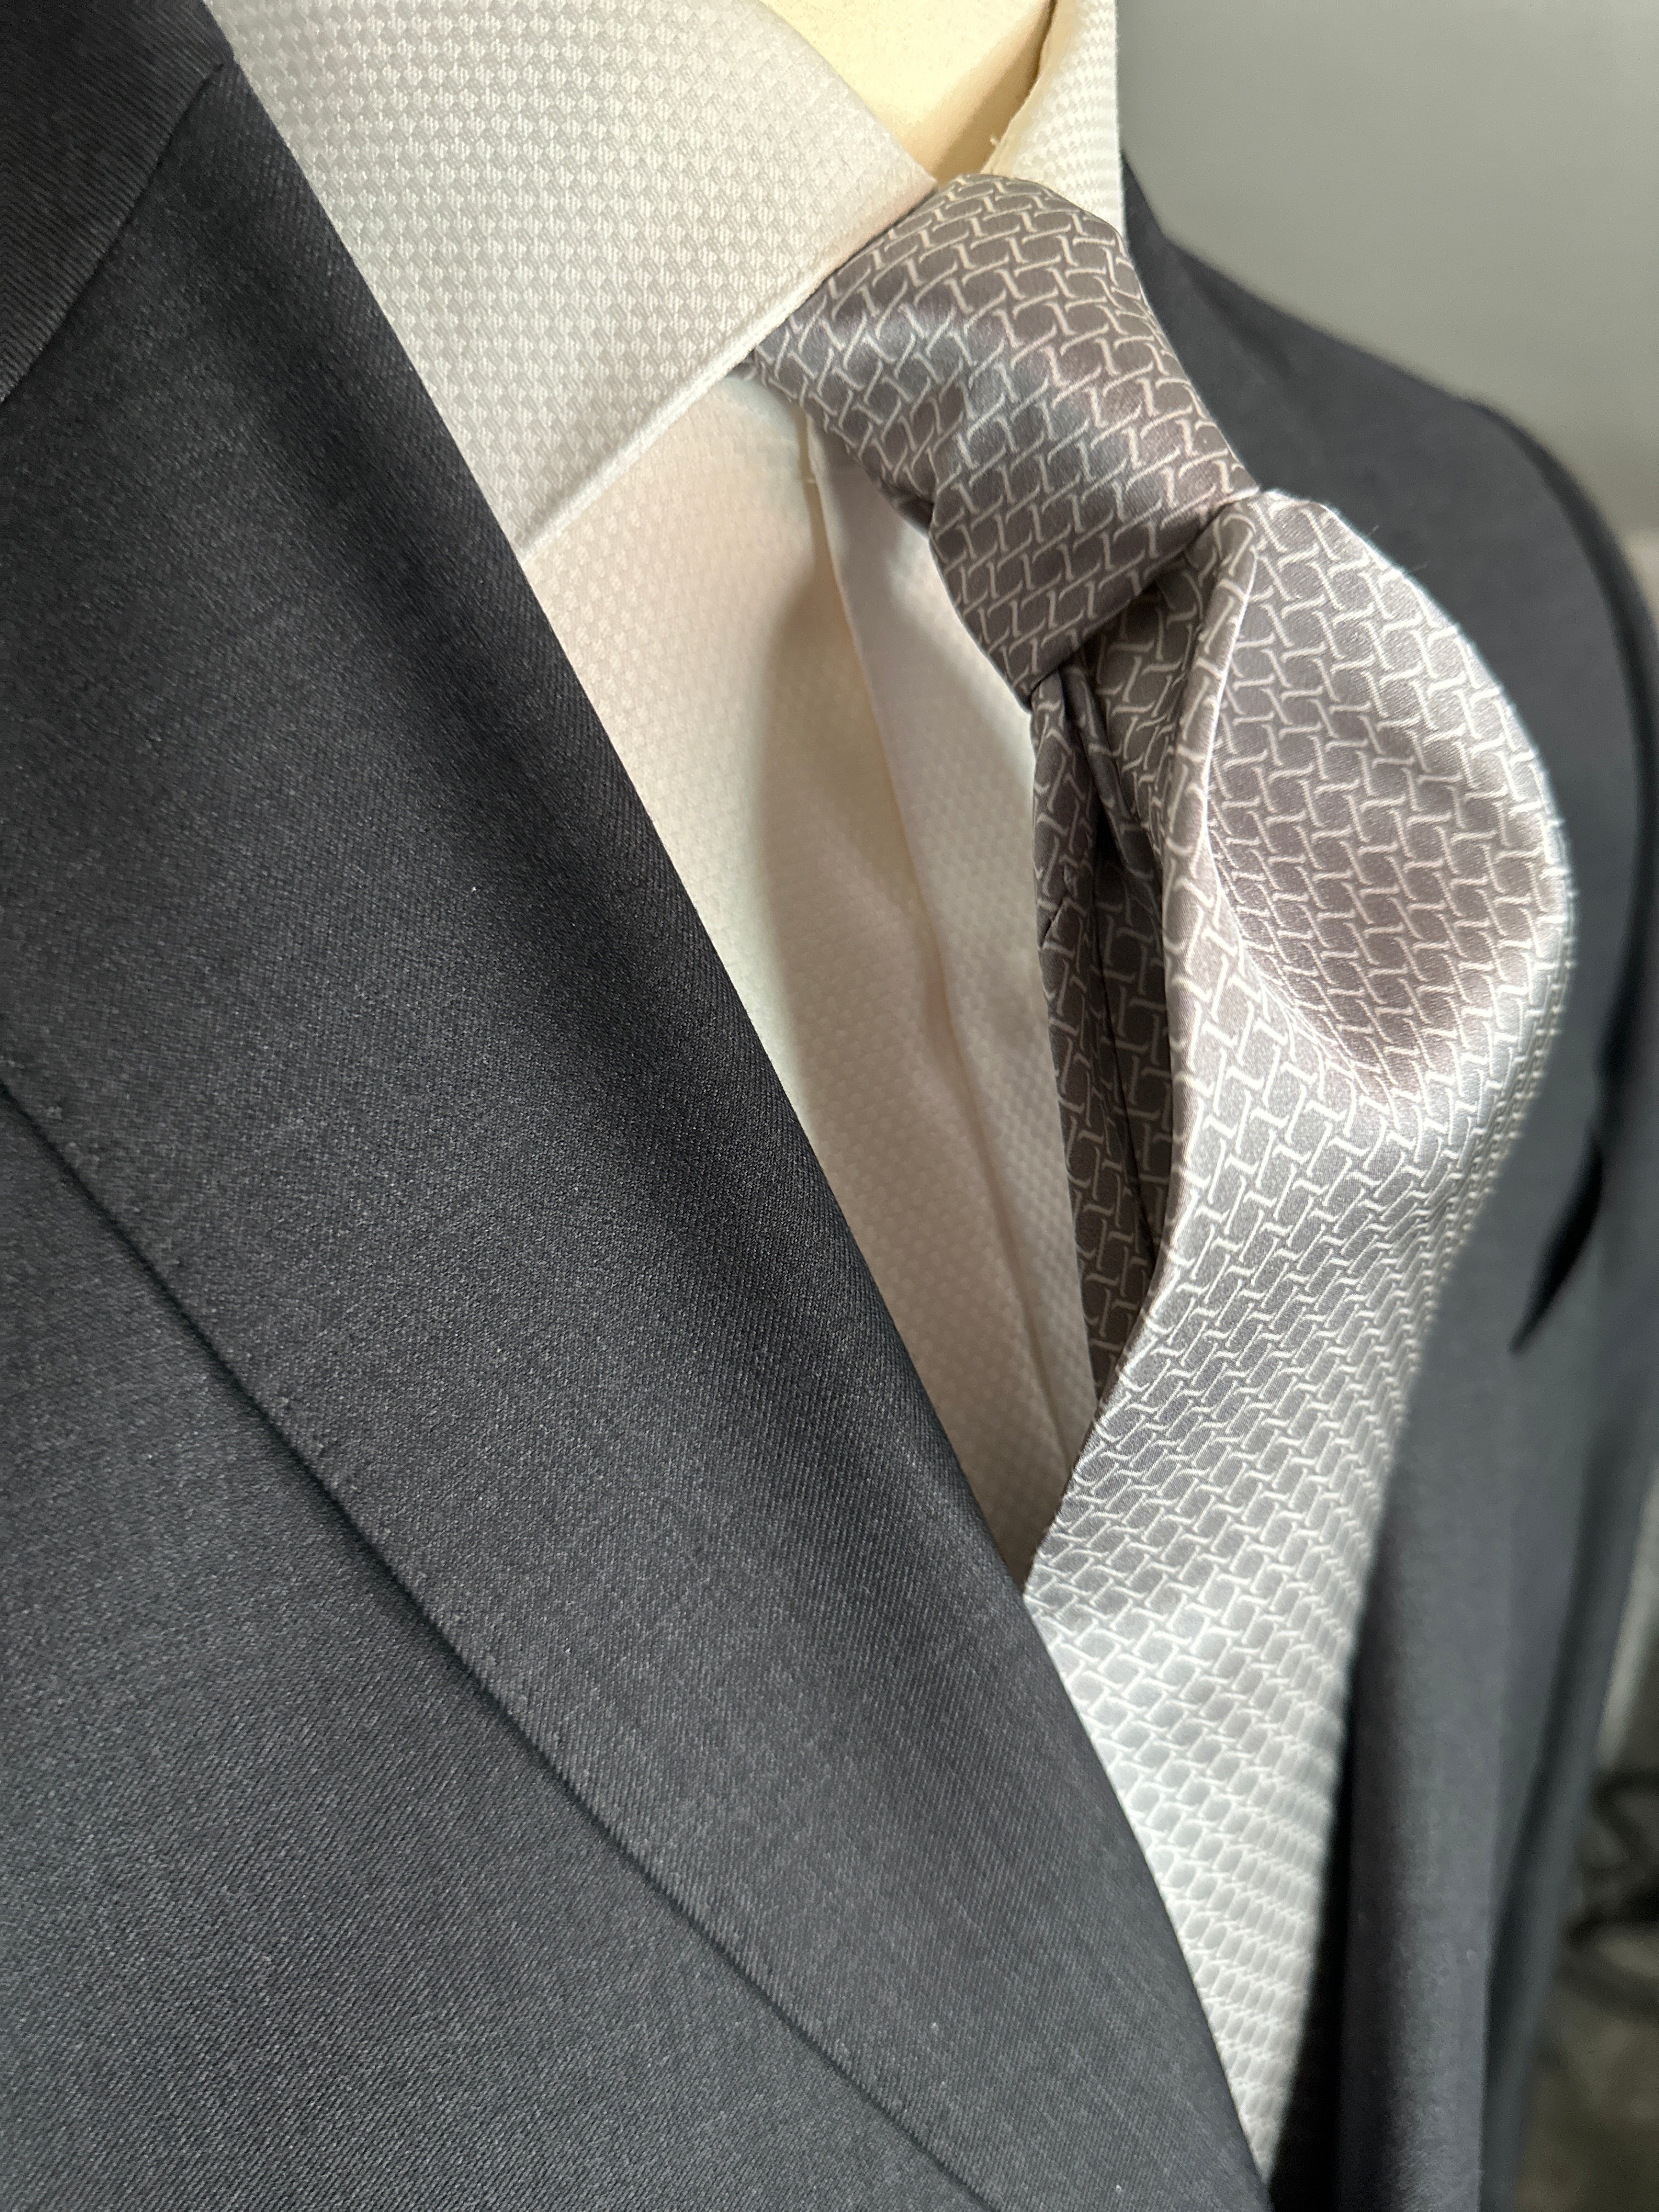 SUITCAFE Silk Tie Silver With White Geometric Interwoven Pattern Satin